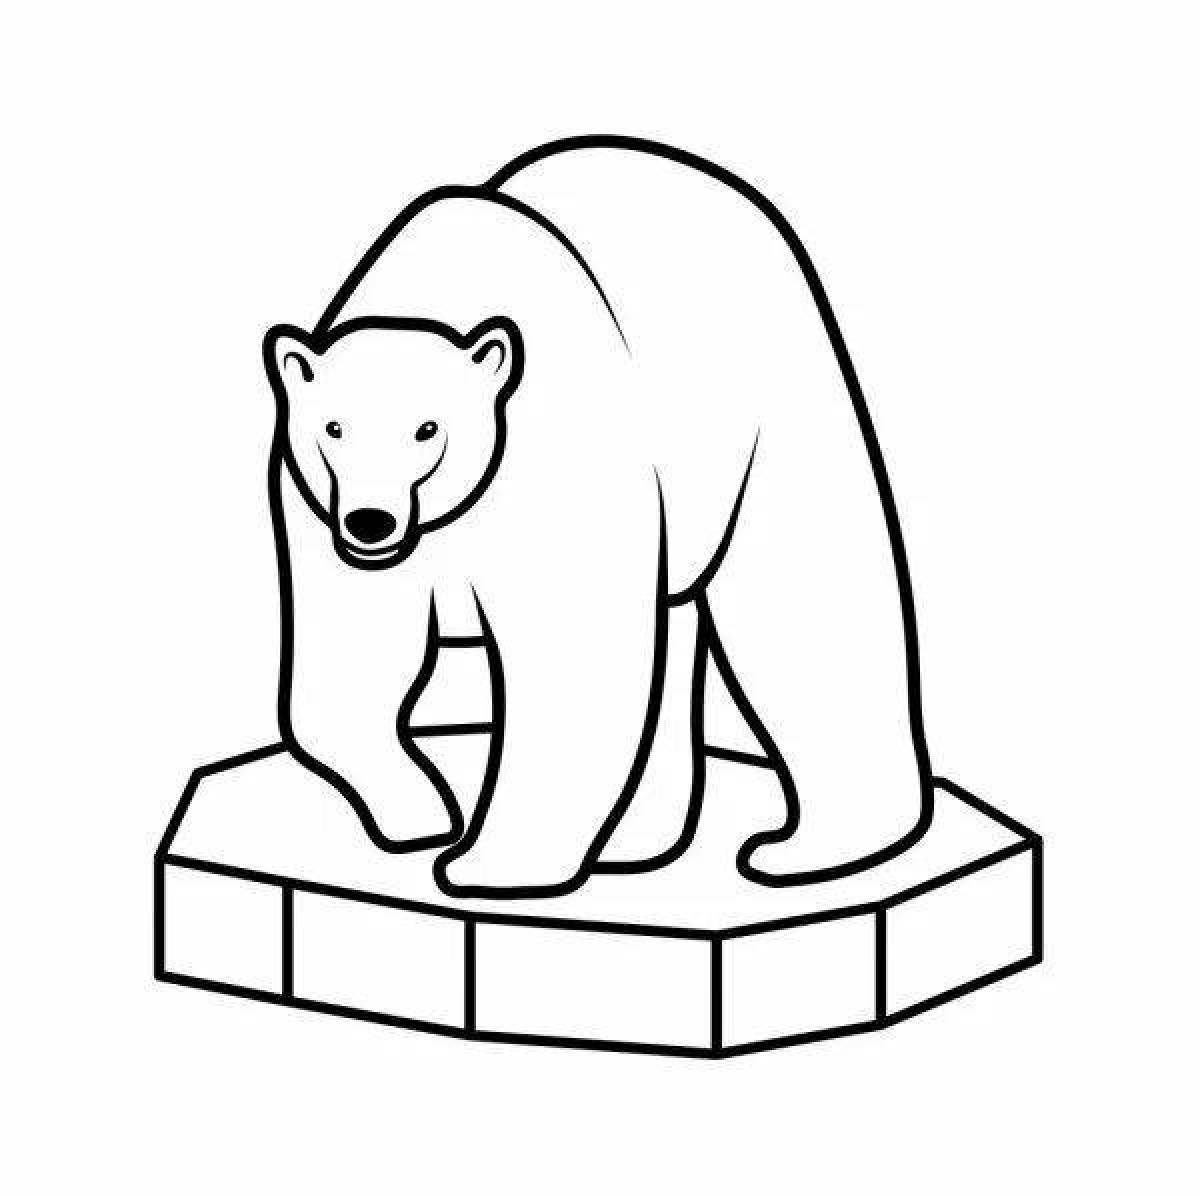 Coloring book animated polar bear on ice